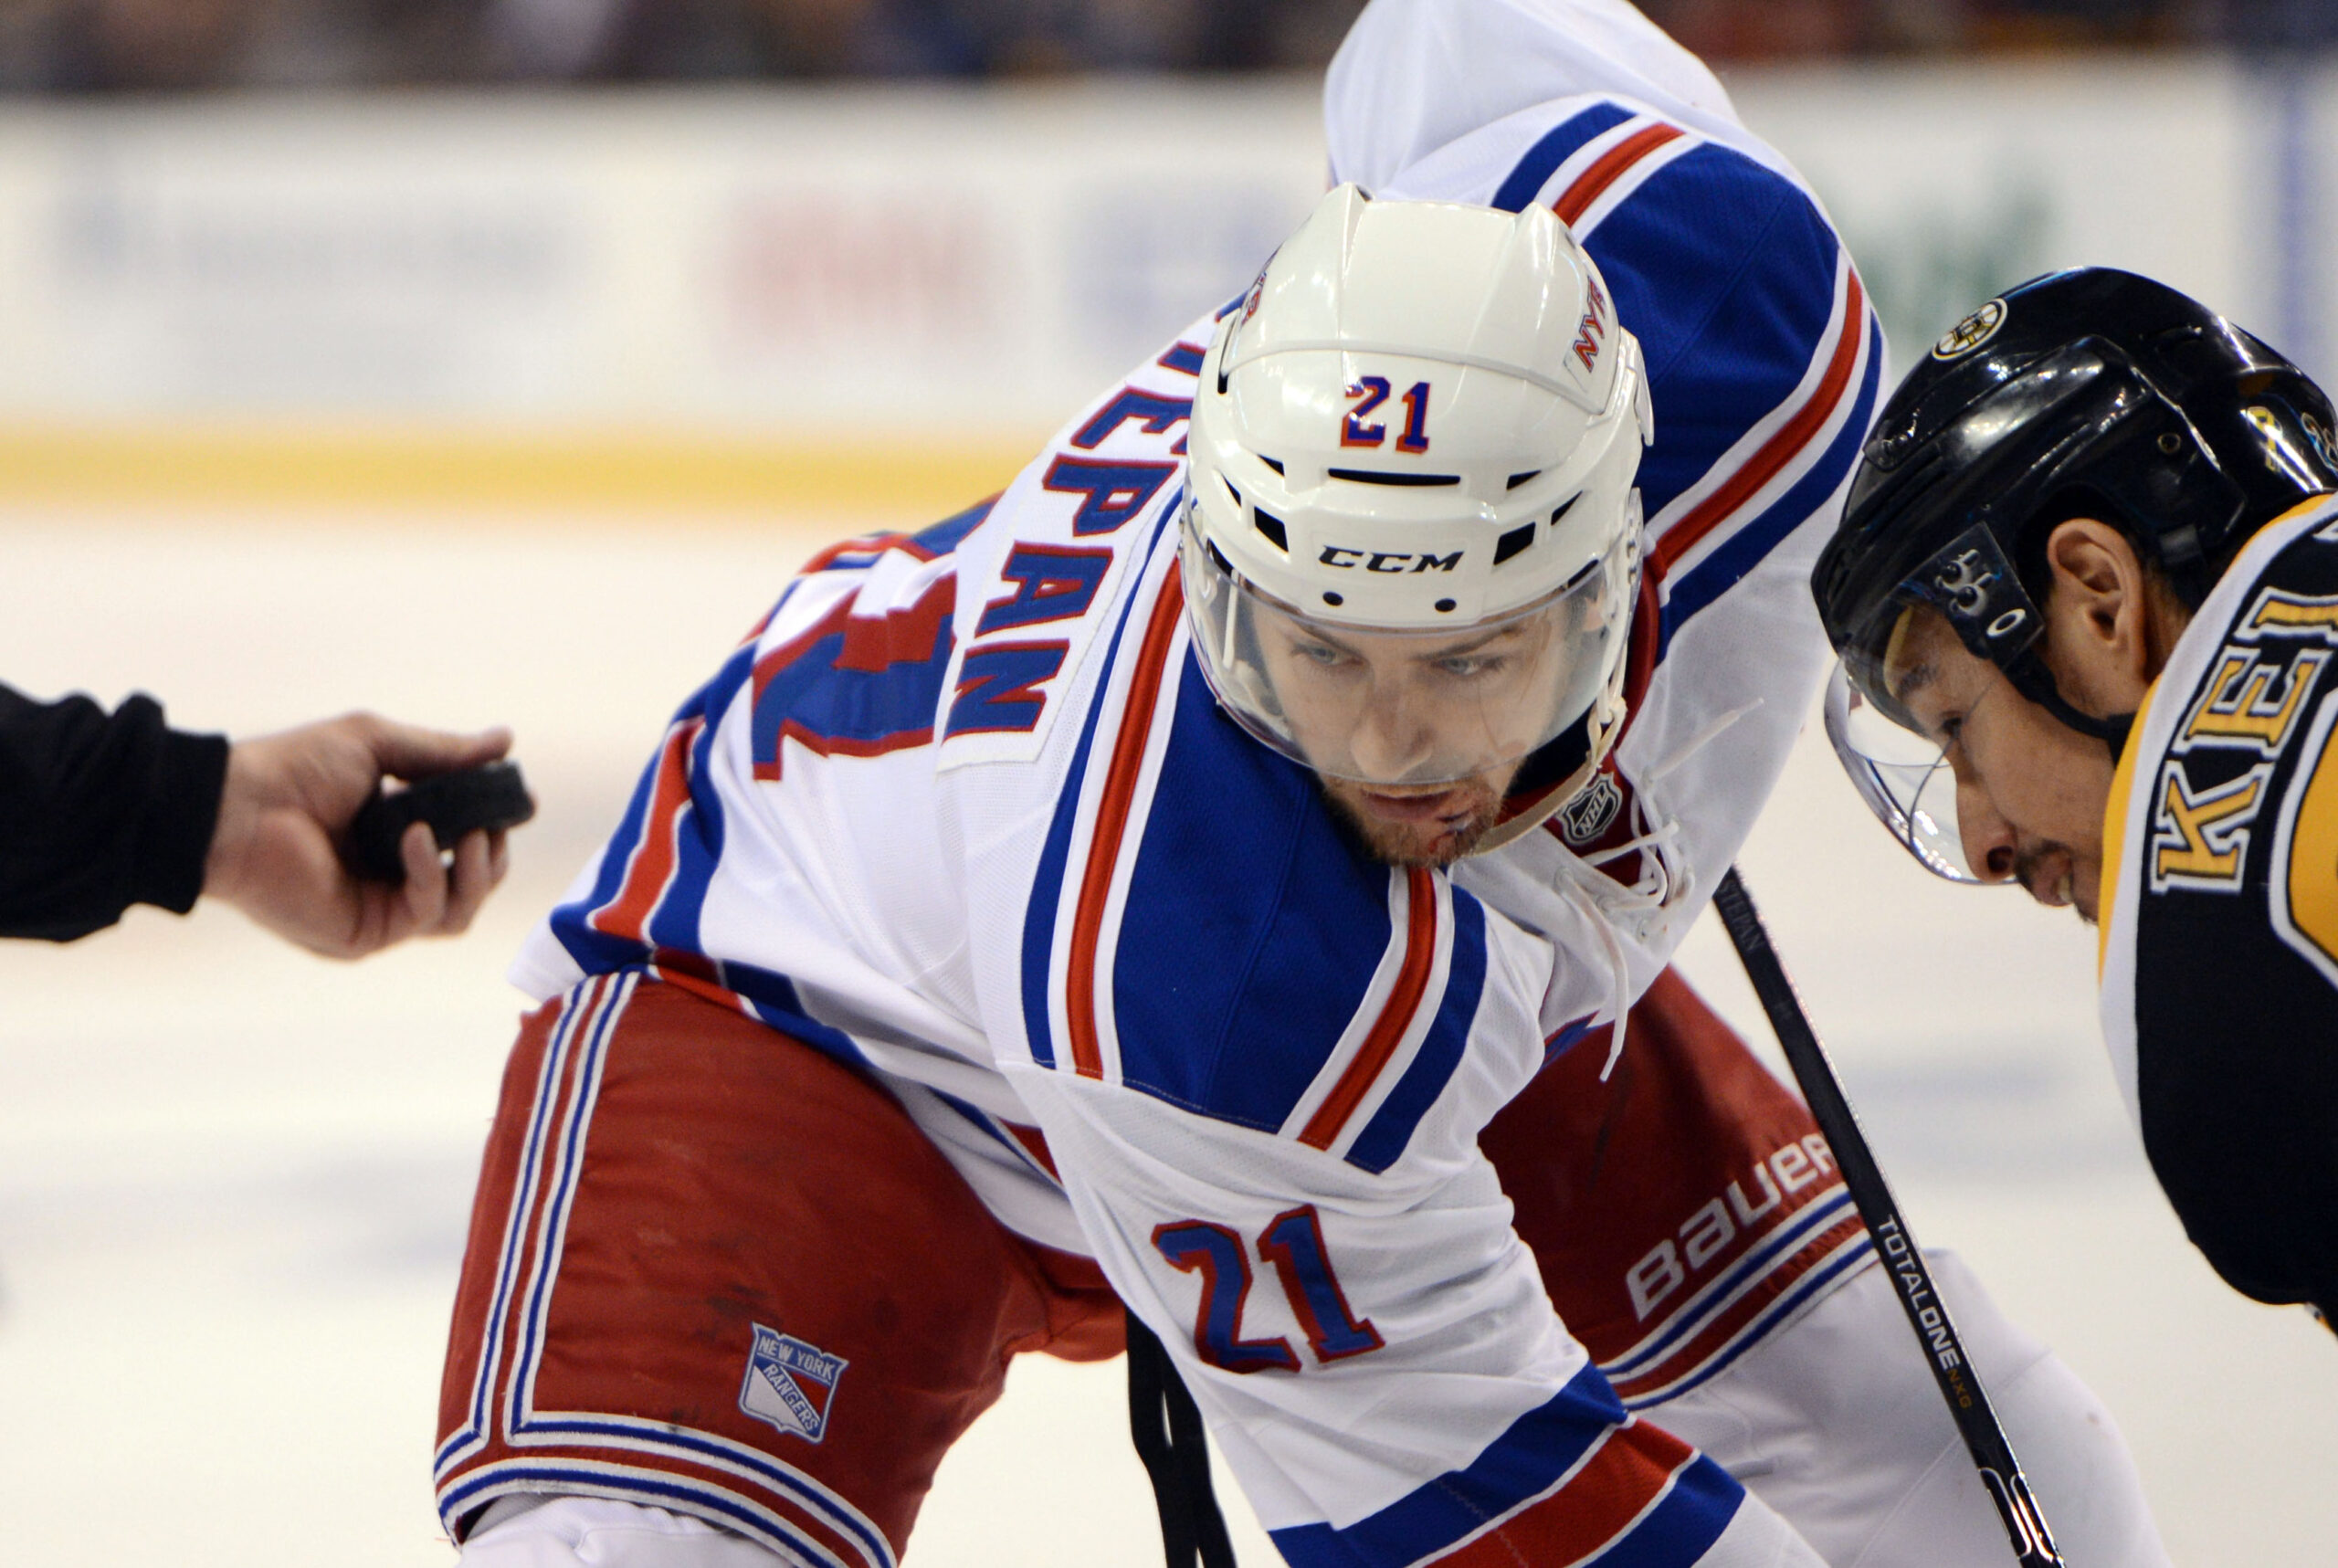 Derek Stepan Announces Retirement After 13 NHL Seasons - The Hockey News